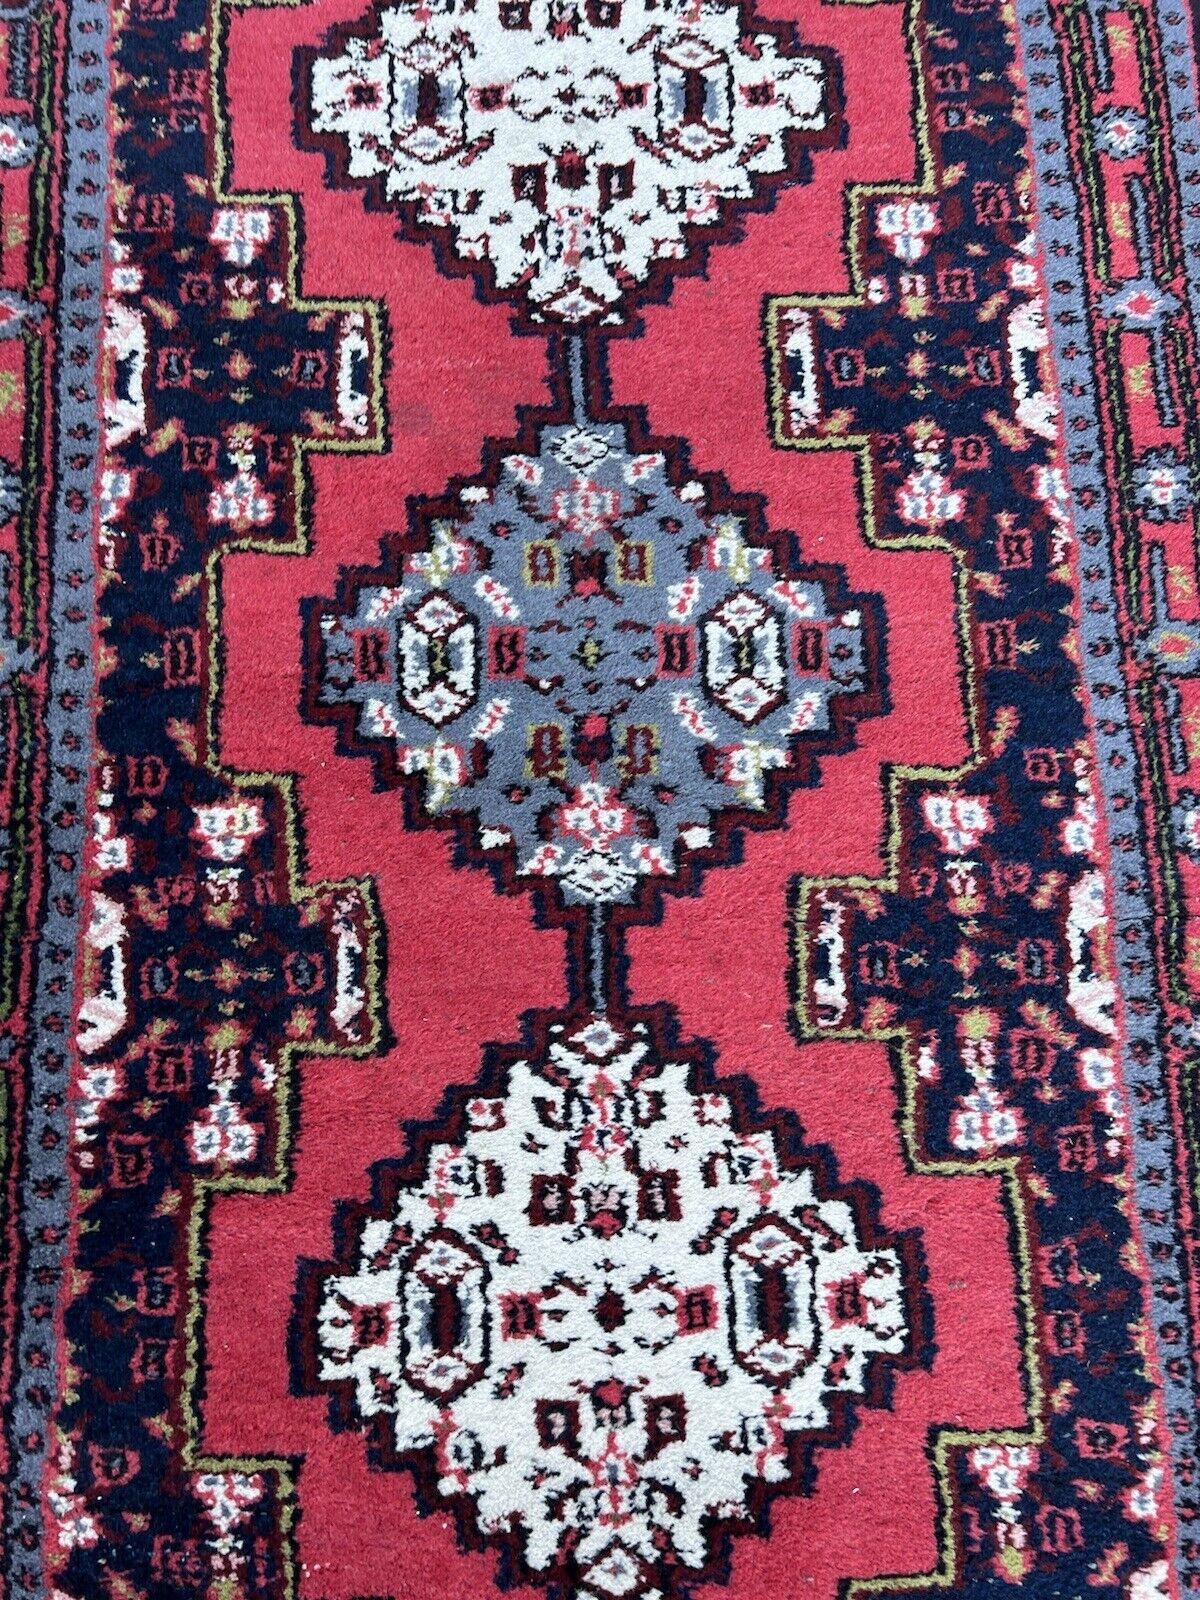 Handmade Vintage Persian Style Hamadan Rug 2.1' x 4.4', 1970s - 1S50 For Sale 4